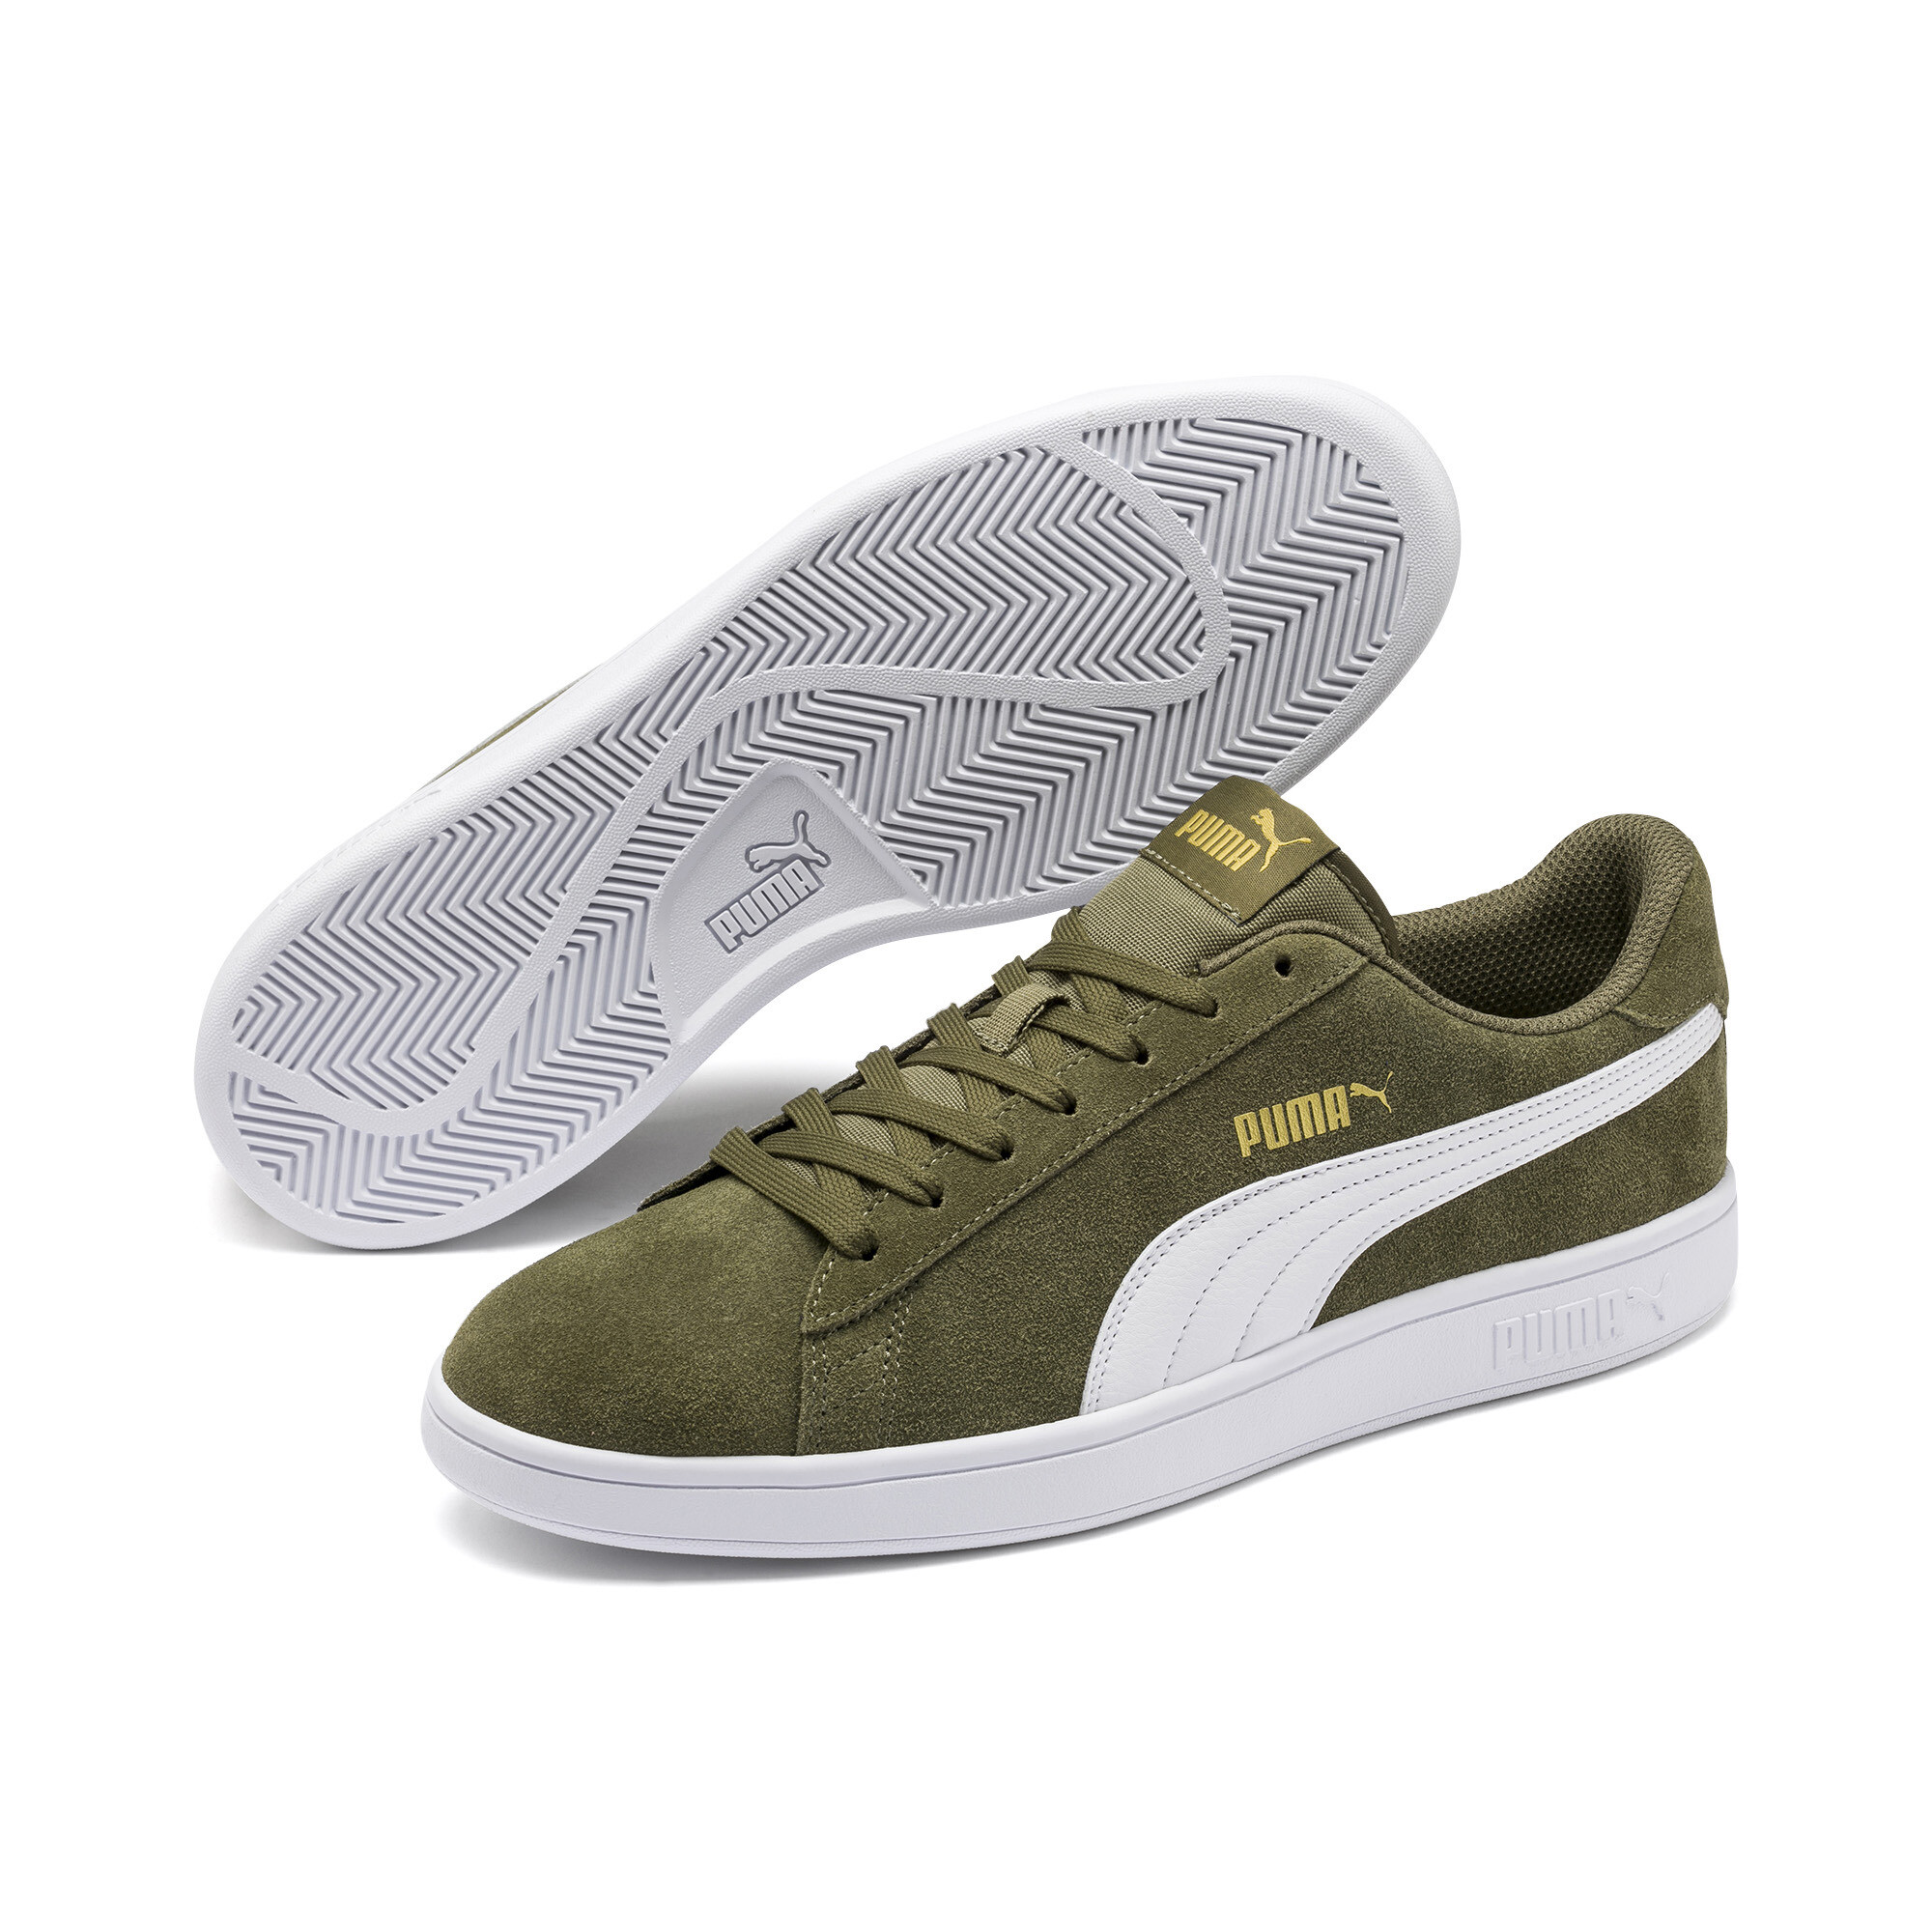 Puma Smash v2 Sneaker Men Shoes Basics NEW | eBay